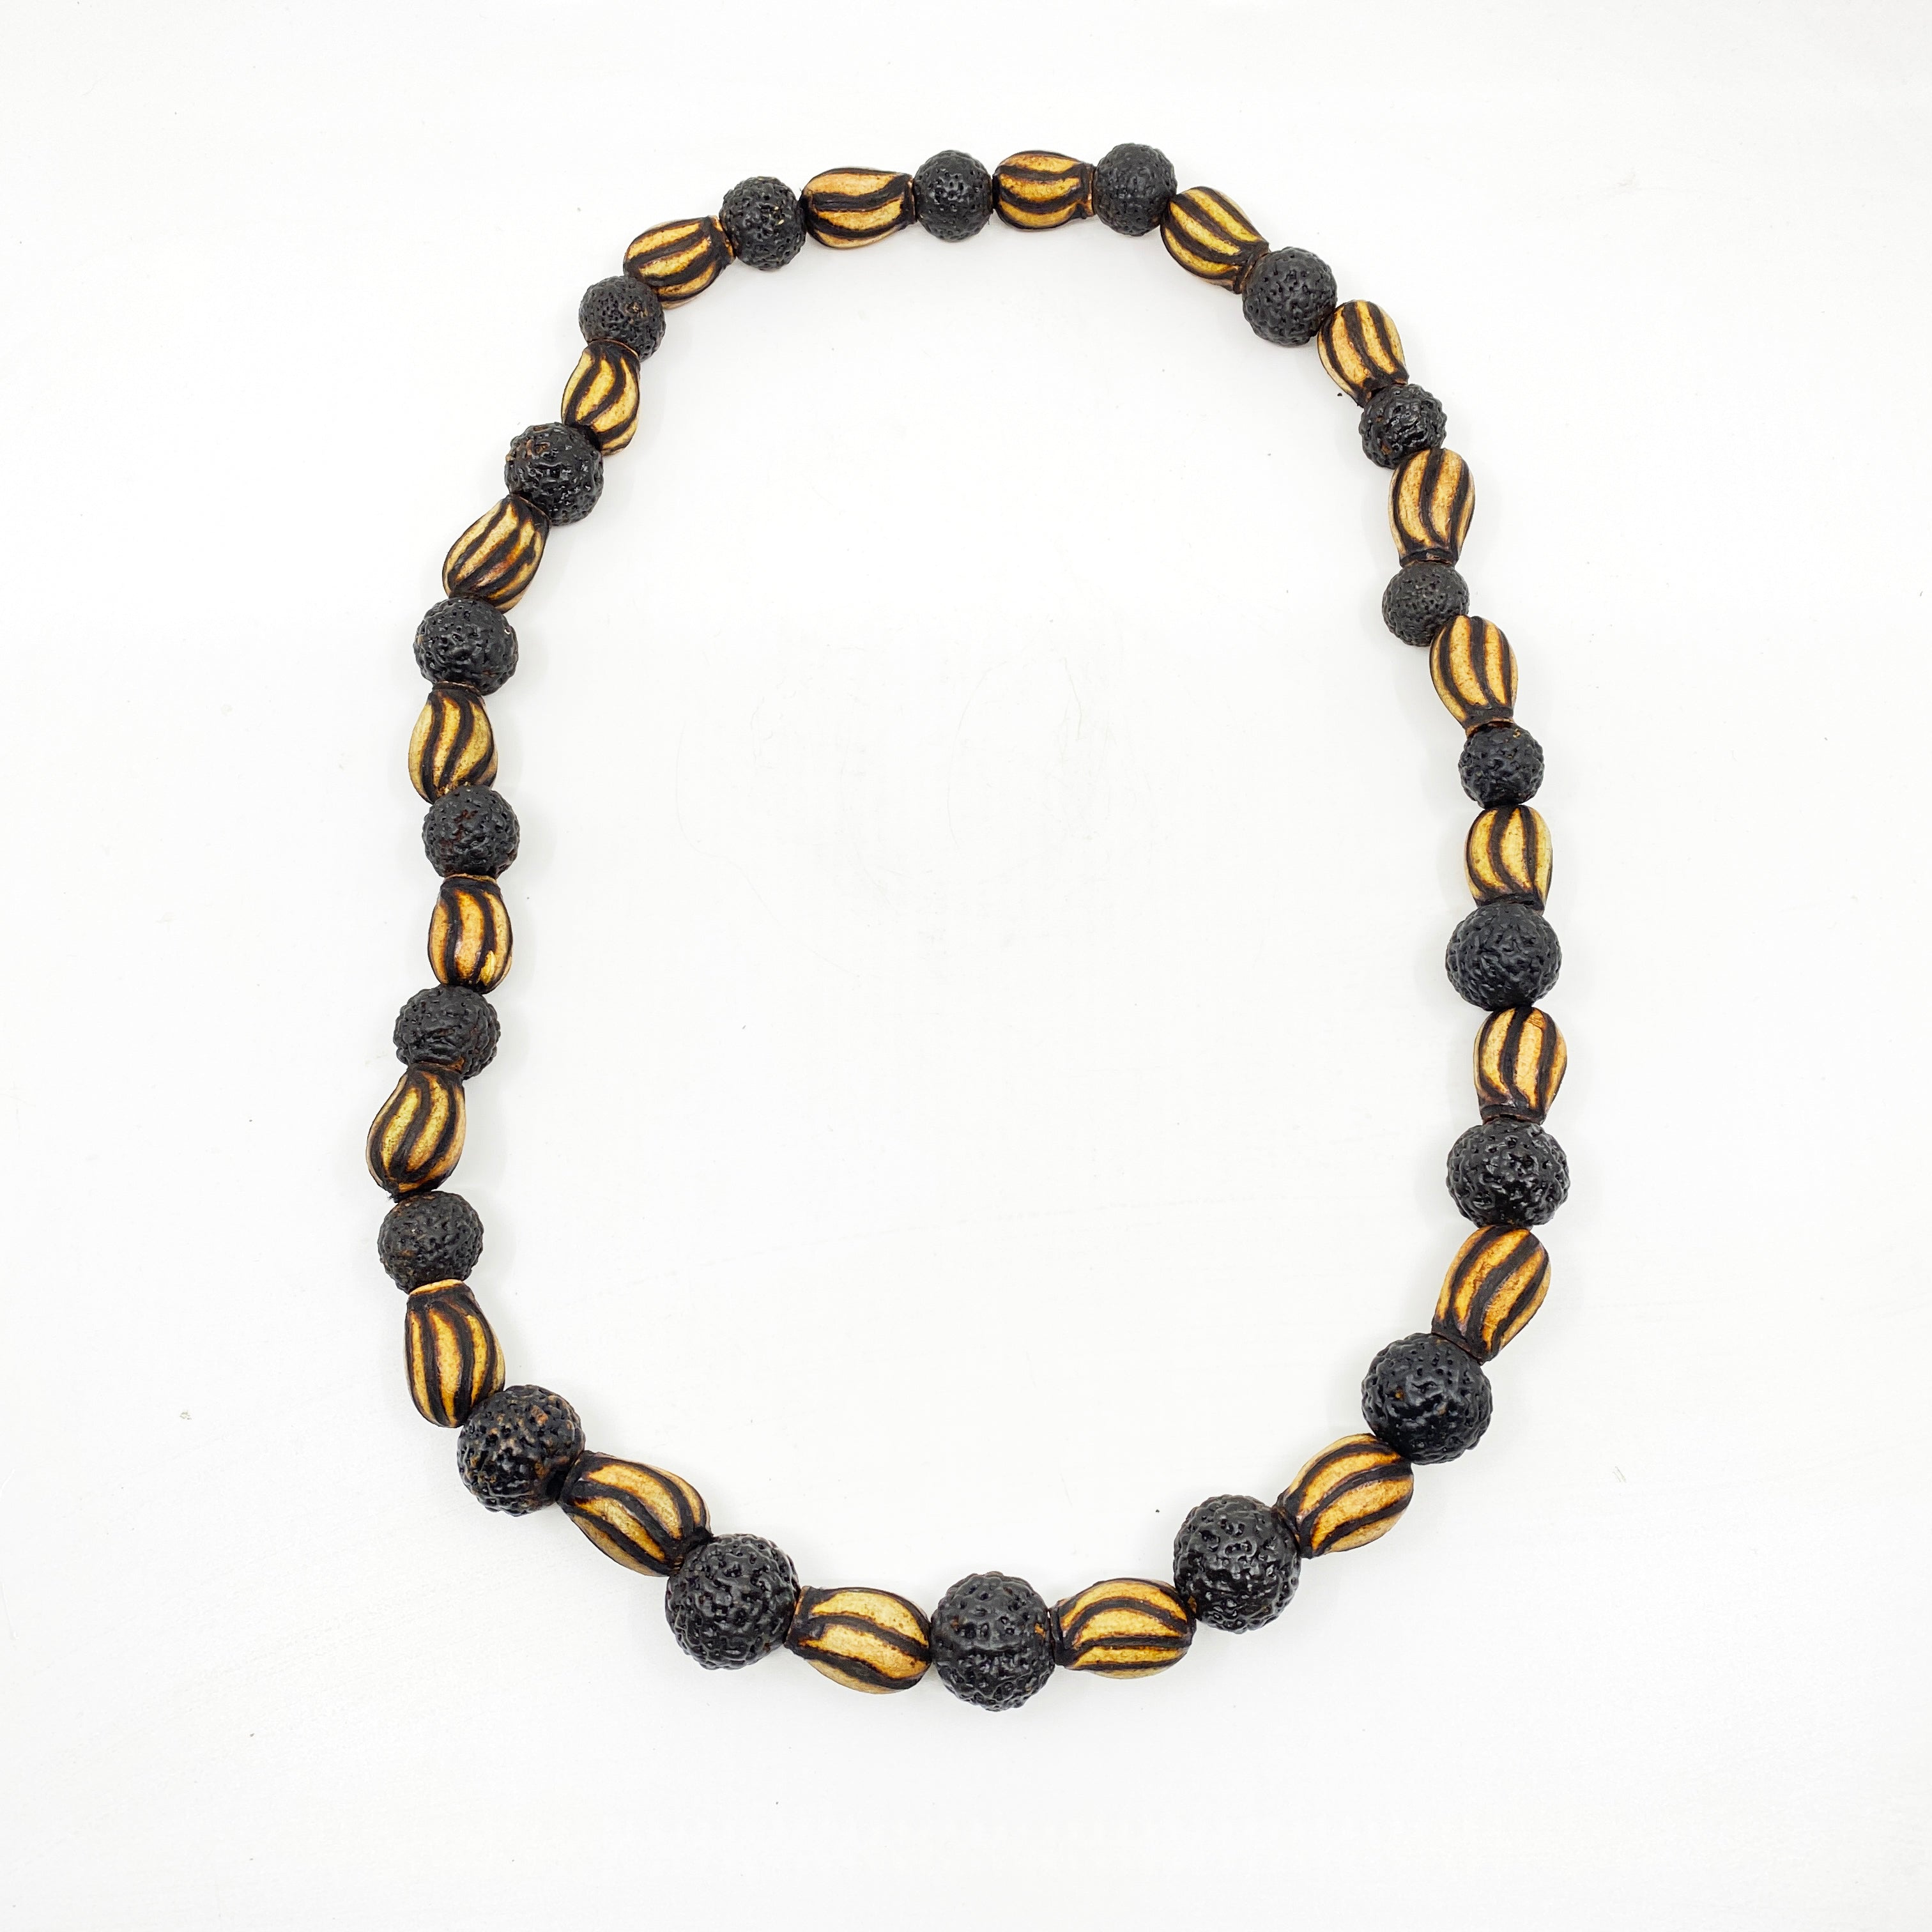 Gumnut Necklace by Margaret Donegan